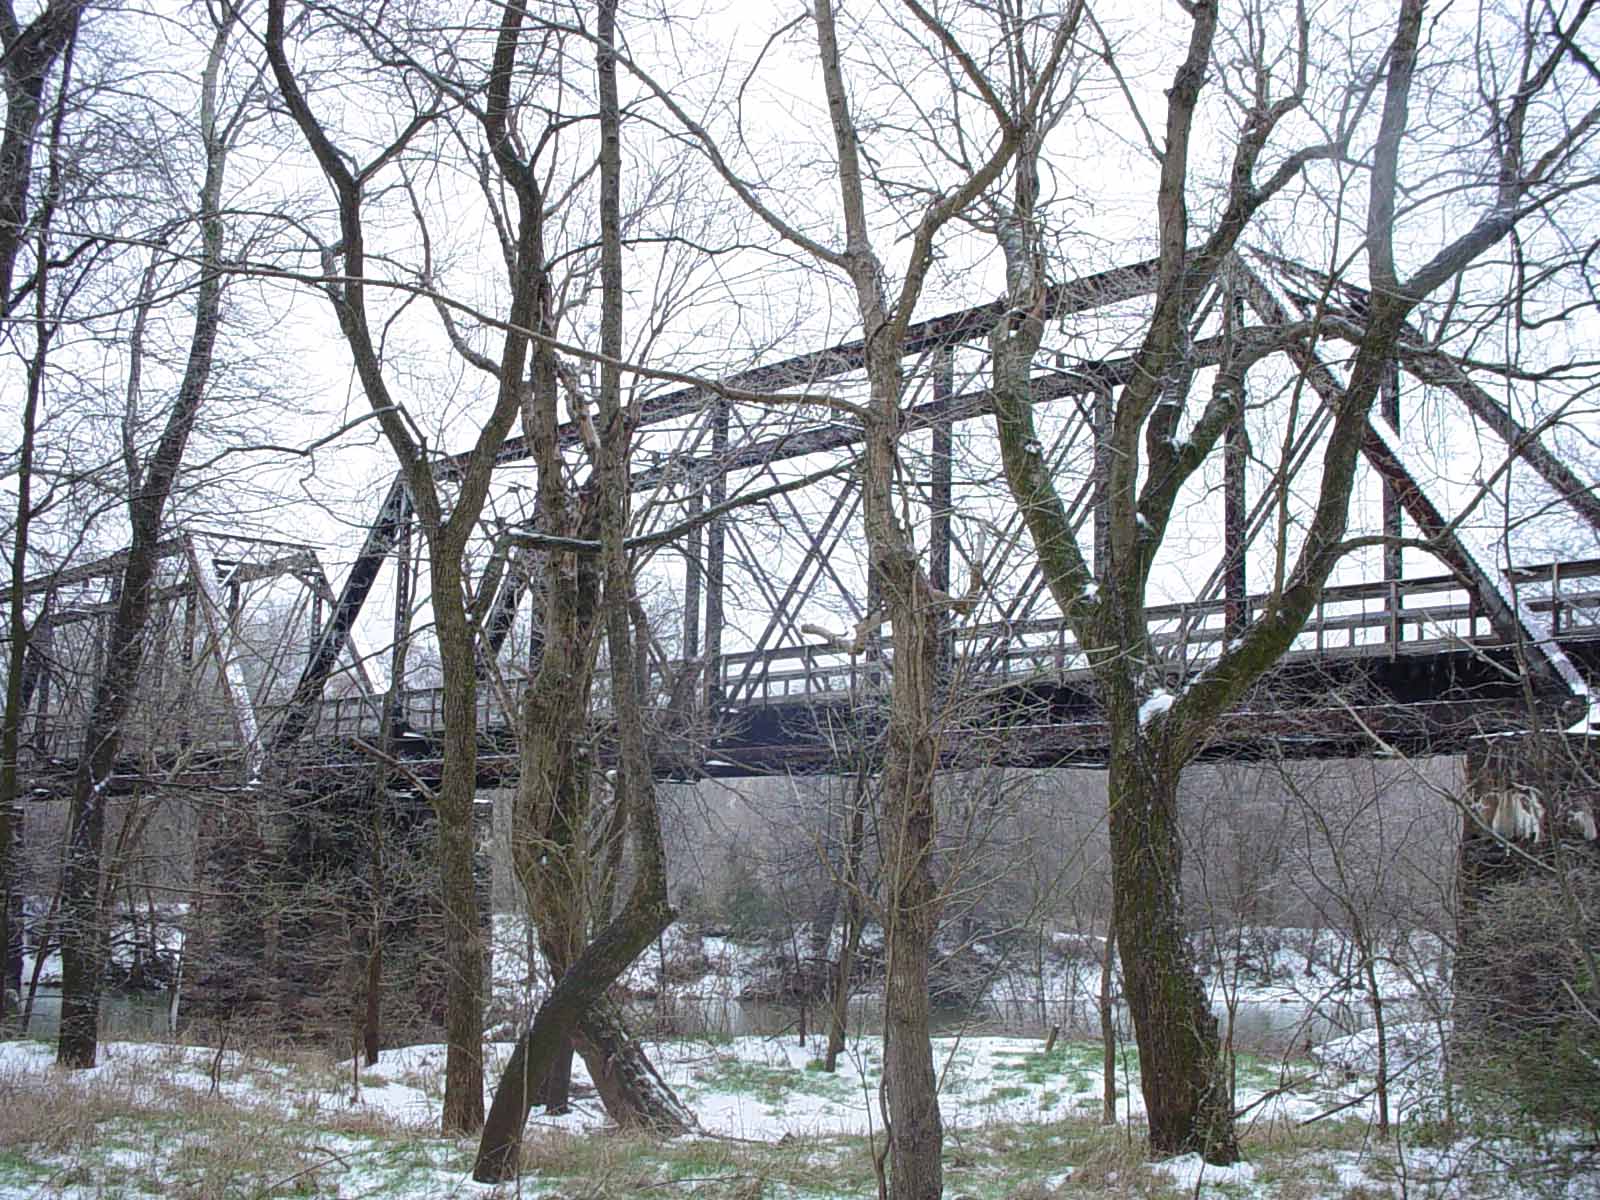 Staunton River Bridge